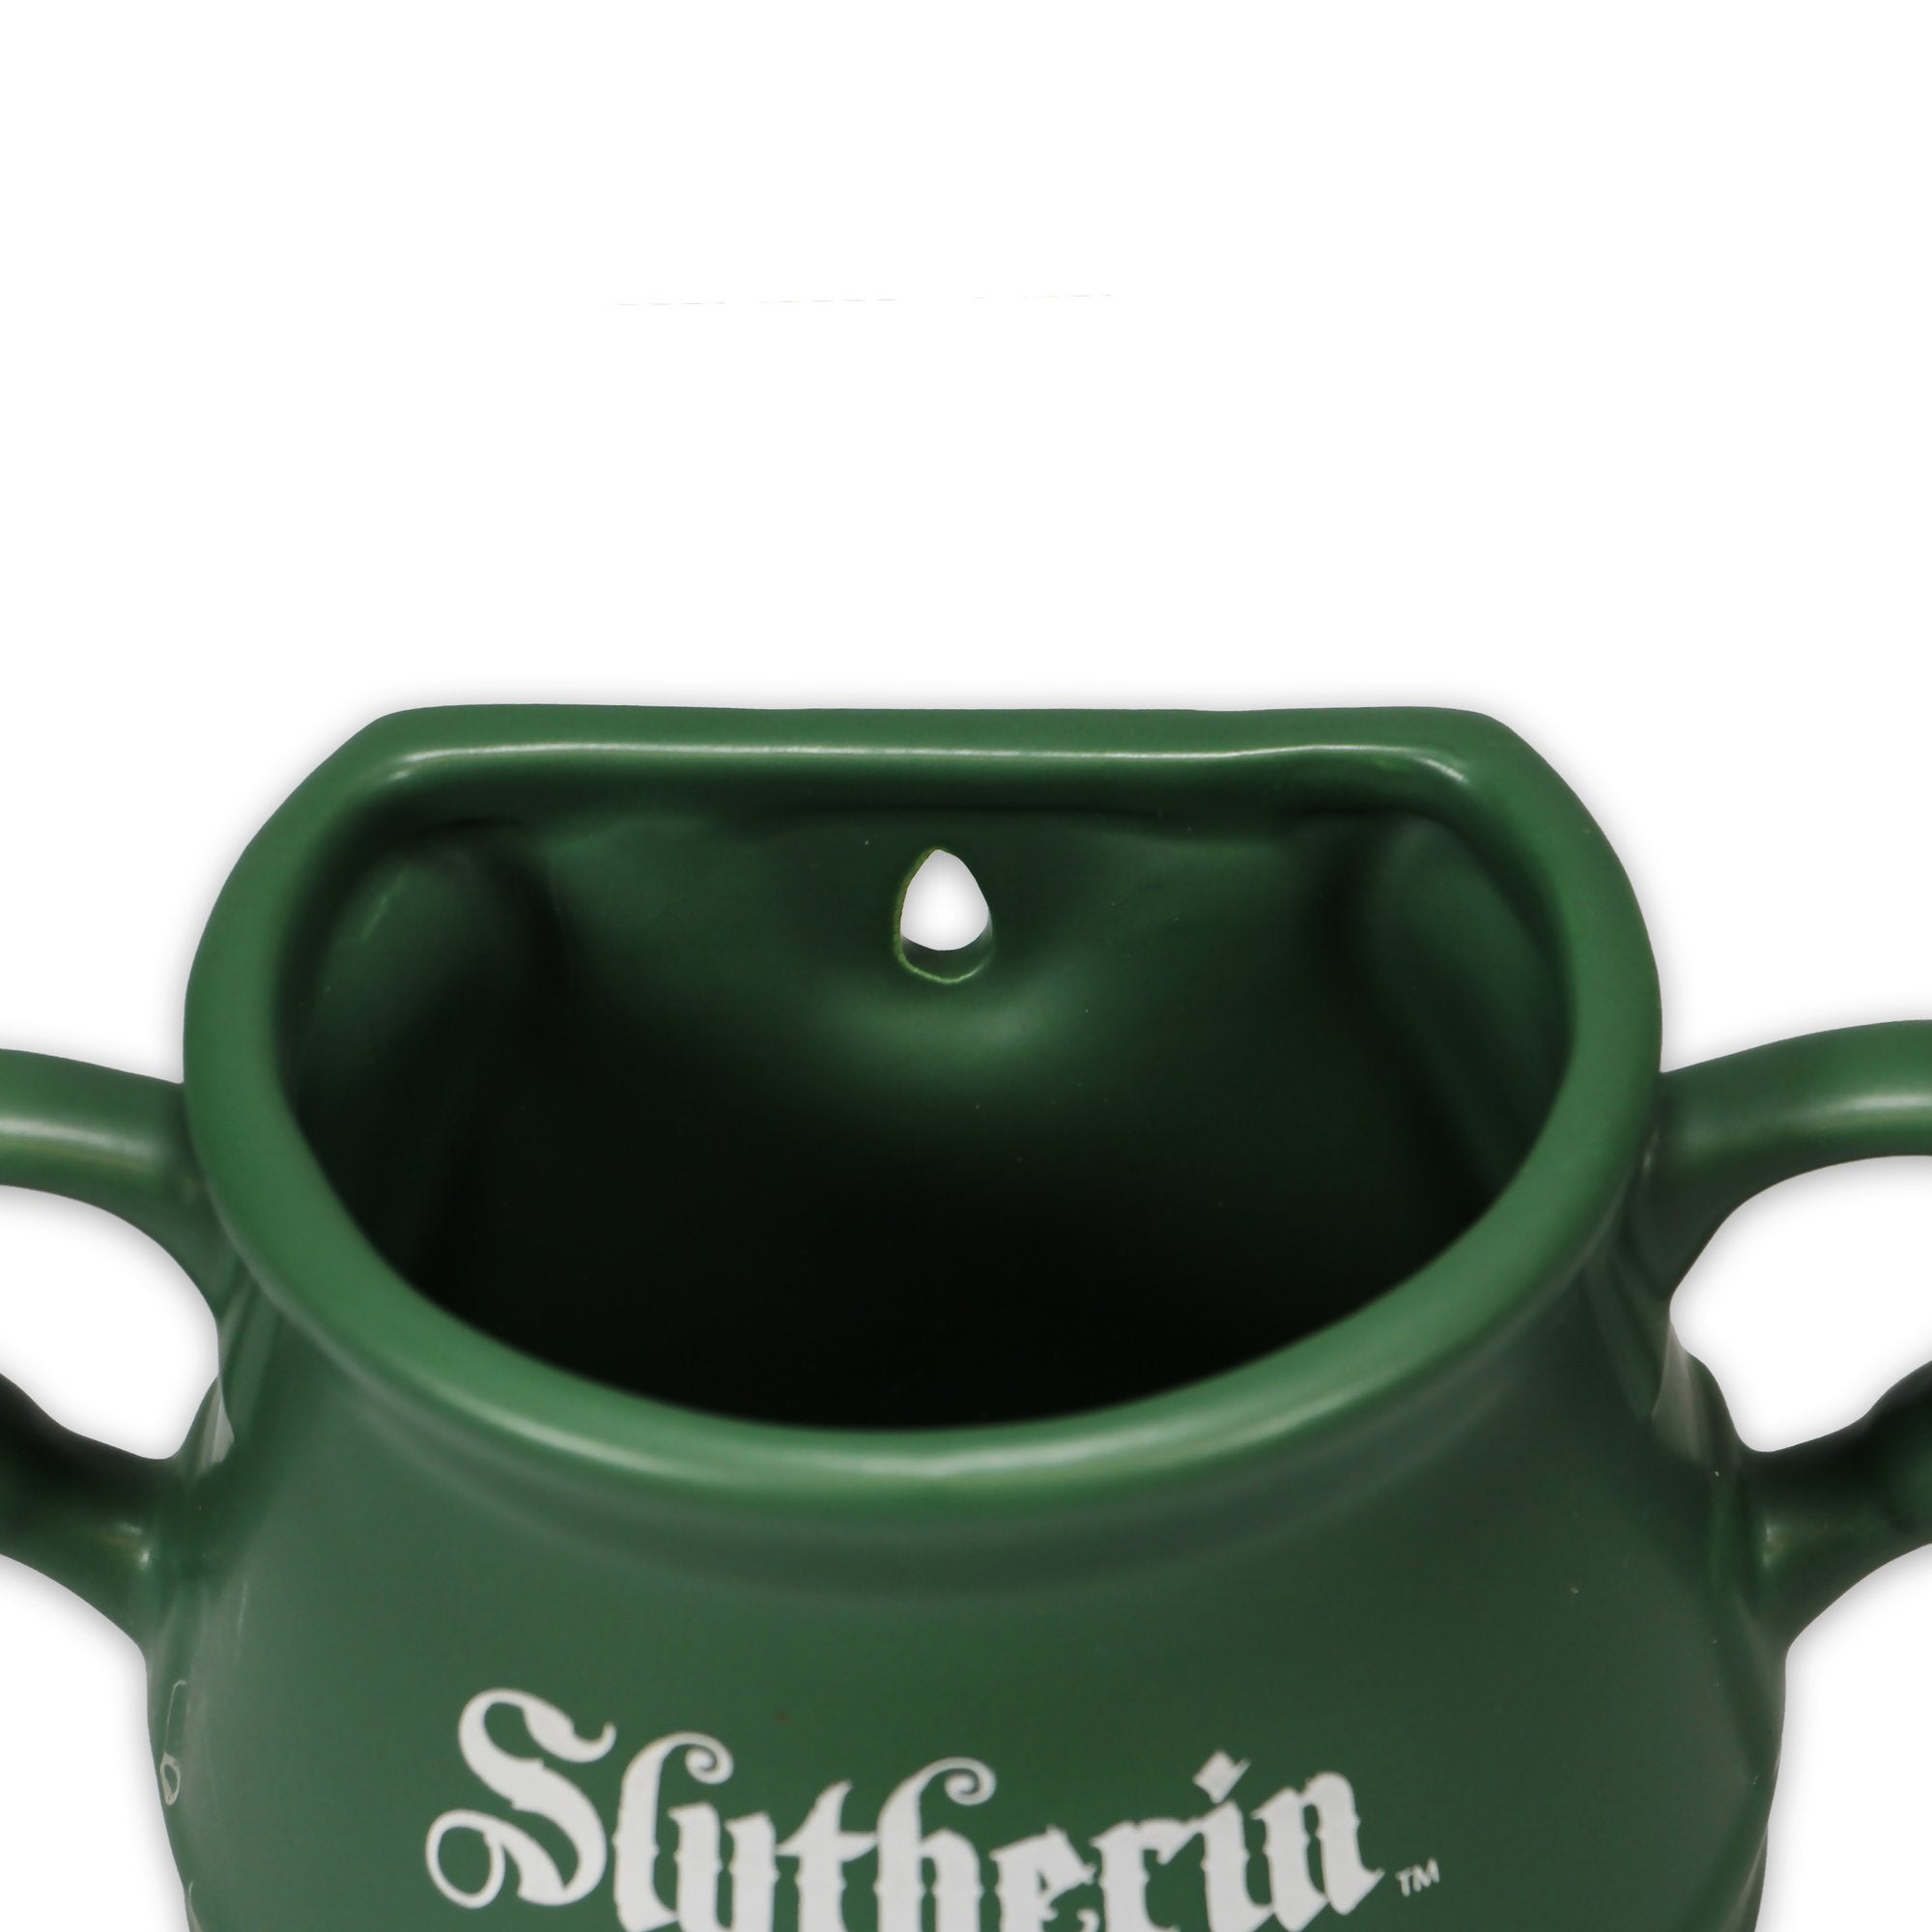 Harry Potter Shaped Wall Vase - Slytherin Cauldron